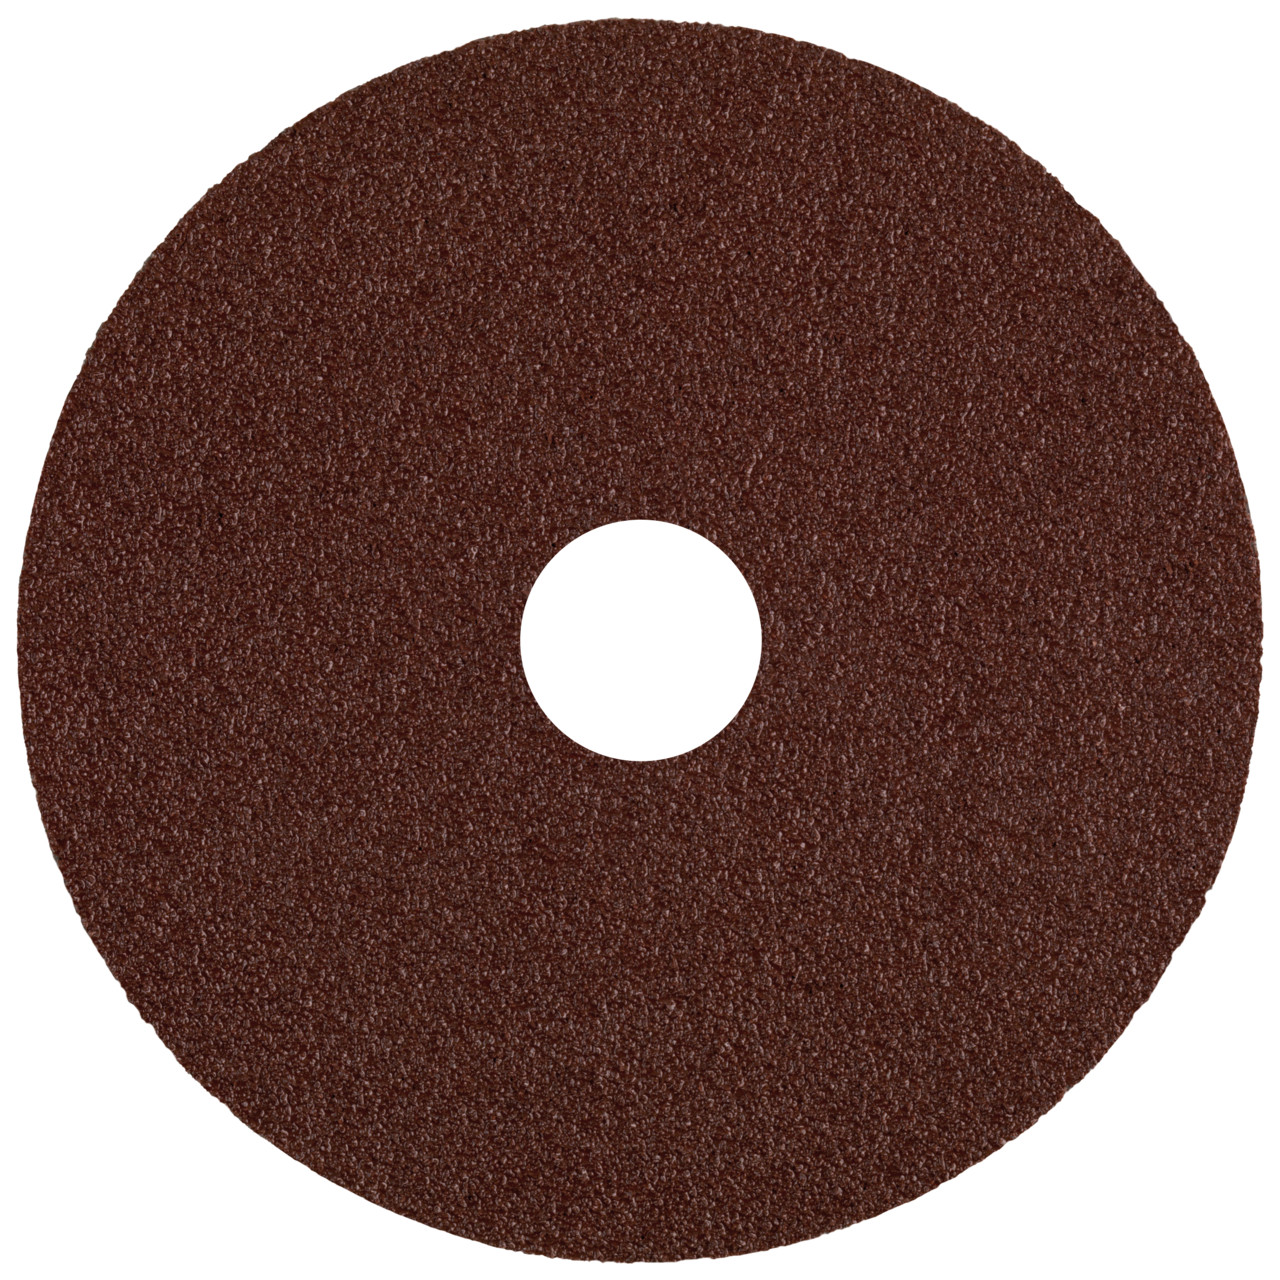 Tyrolit A-B02 V Vulcanised fibre disc DxH 125x22 For steel, non-ferrous metals and wood, P40, shape: DISC, Art. 34286501